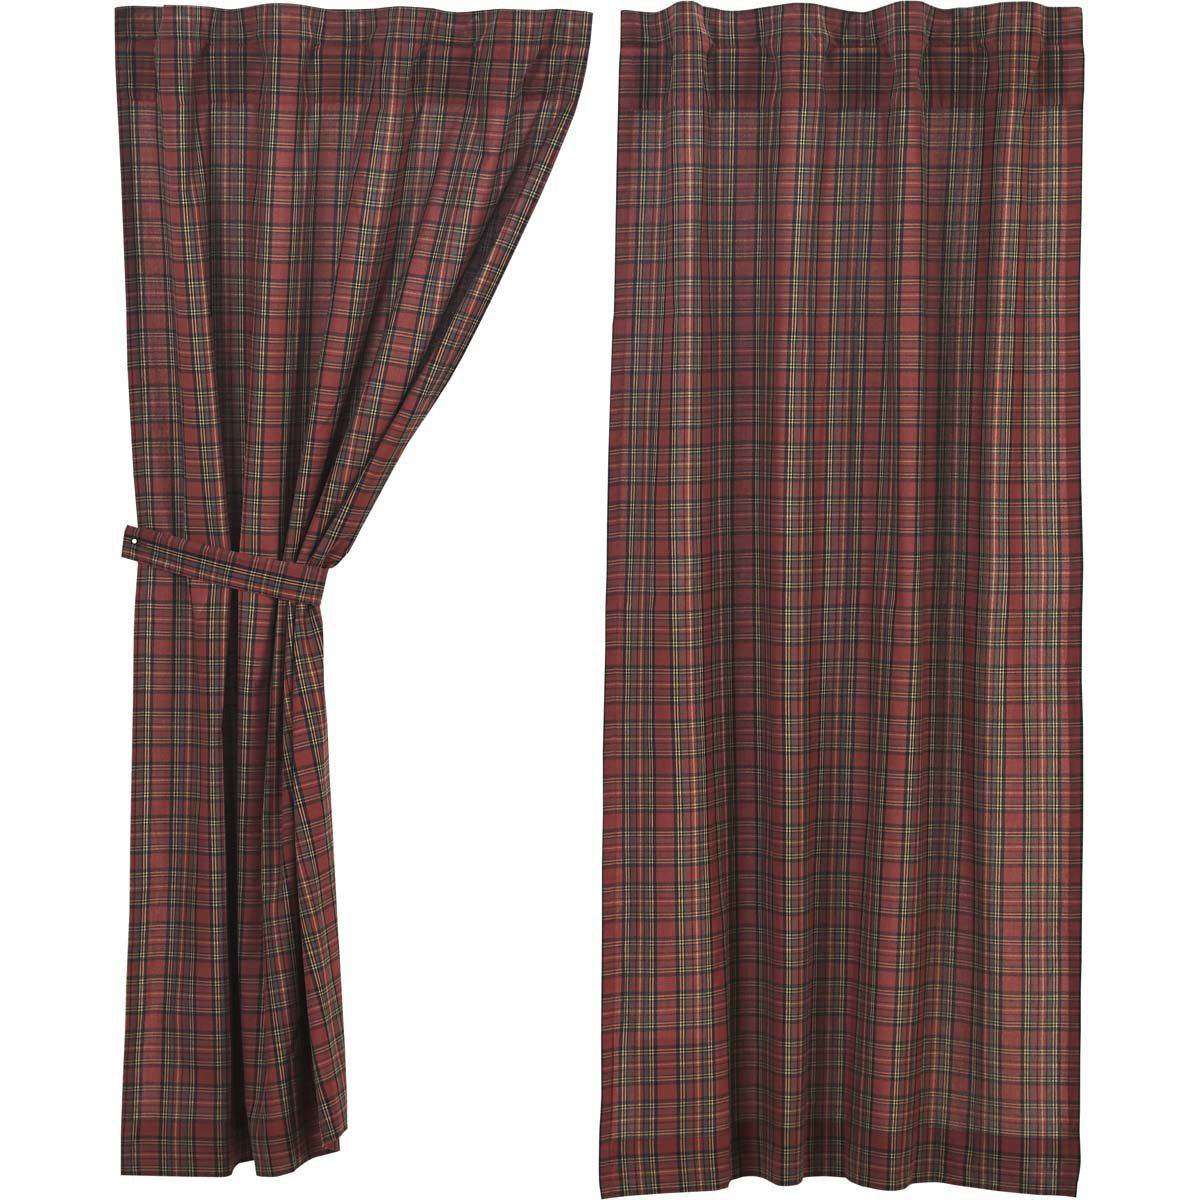 Tartan Red Plaid Short Panel Curtain Set of 2 63"x36" VHC Brands - The Fox Decor